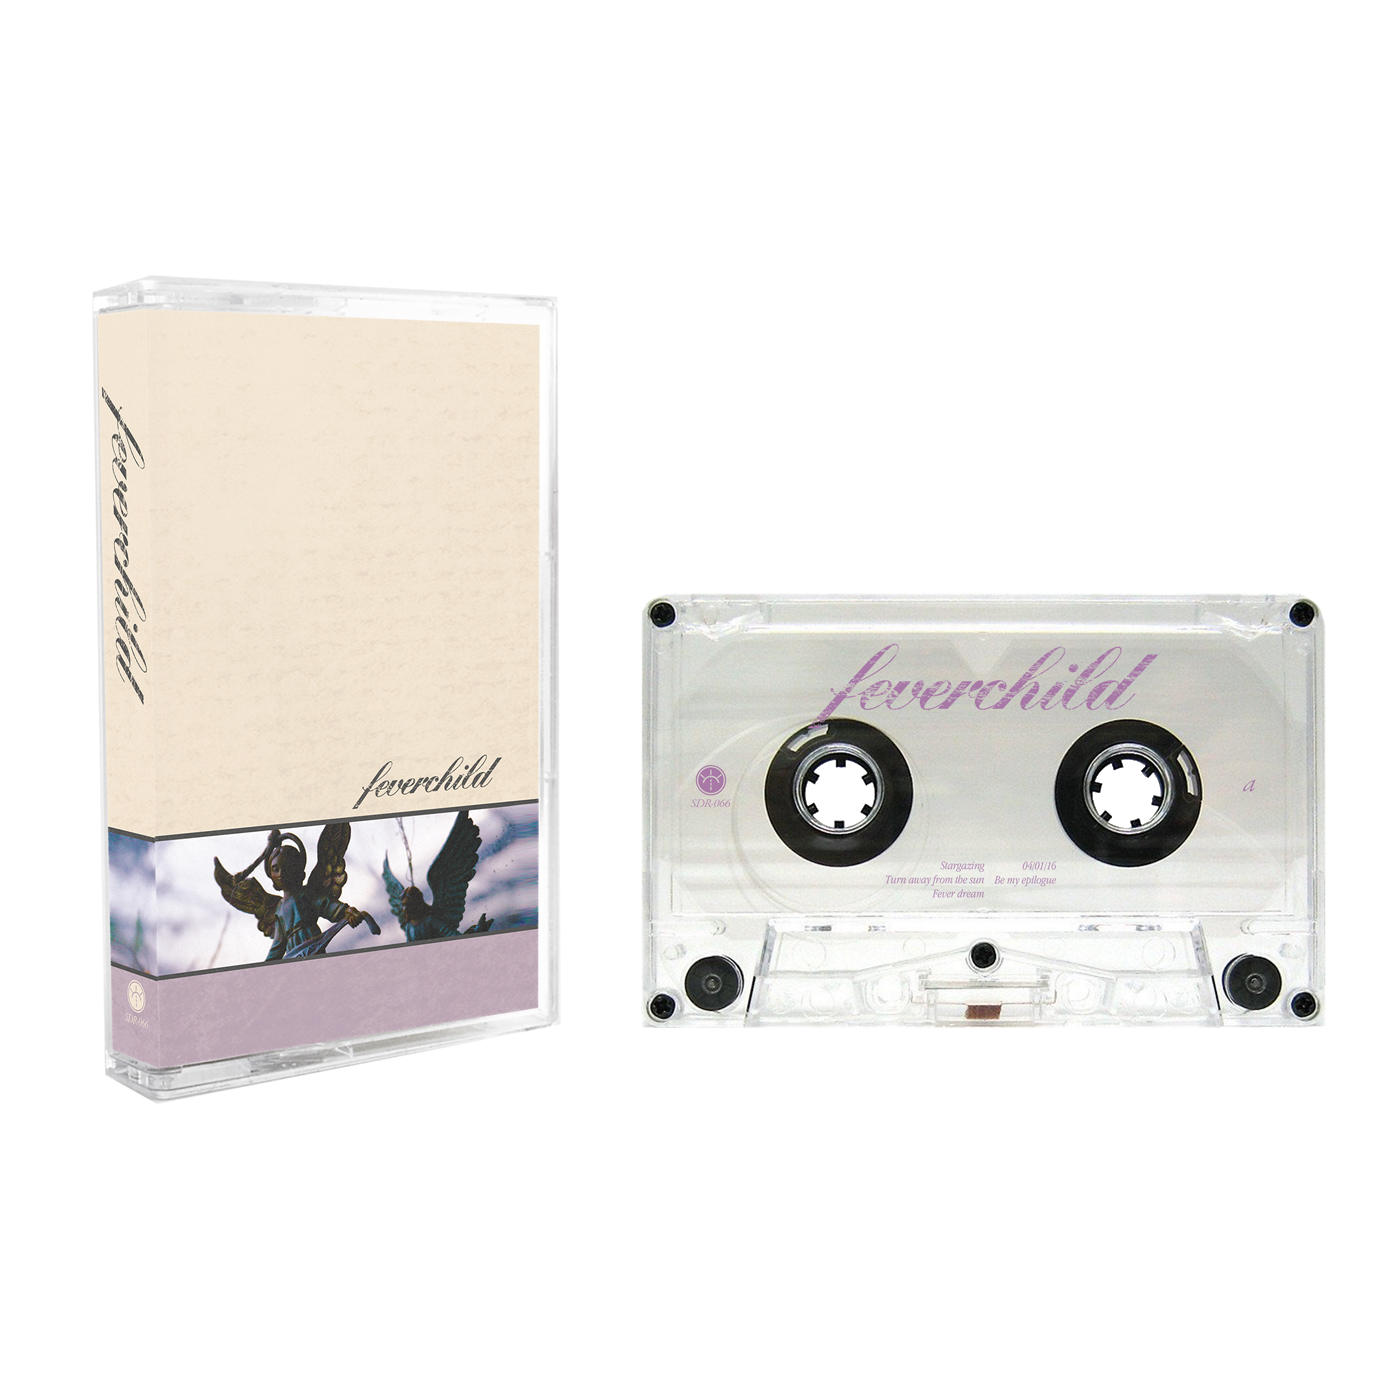 Feverchild-ST-Tape-Mockup-Lilac-2021-07-06.png